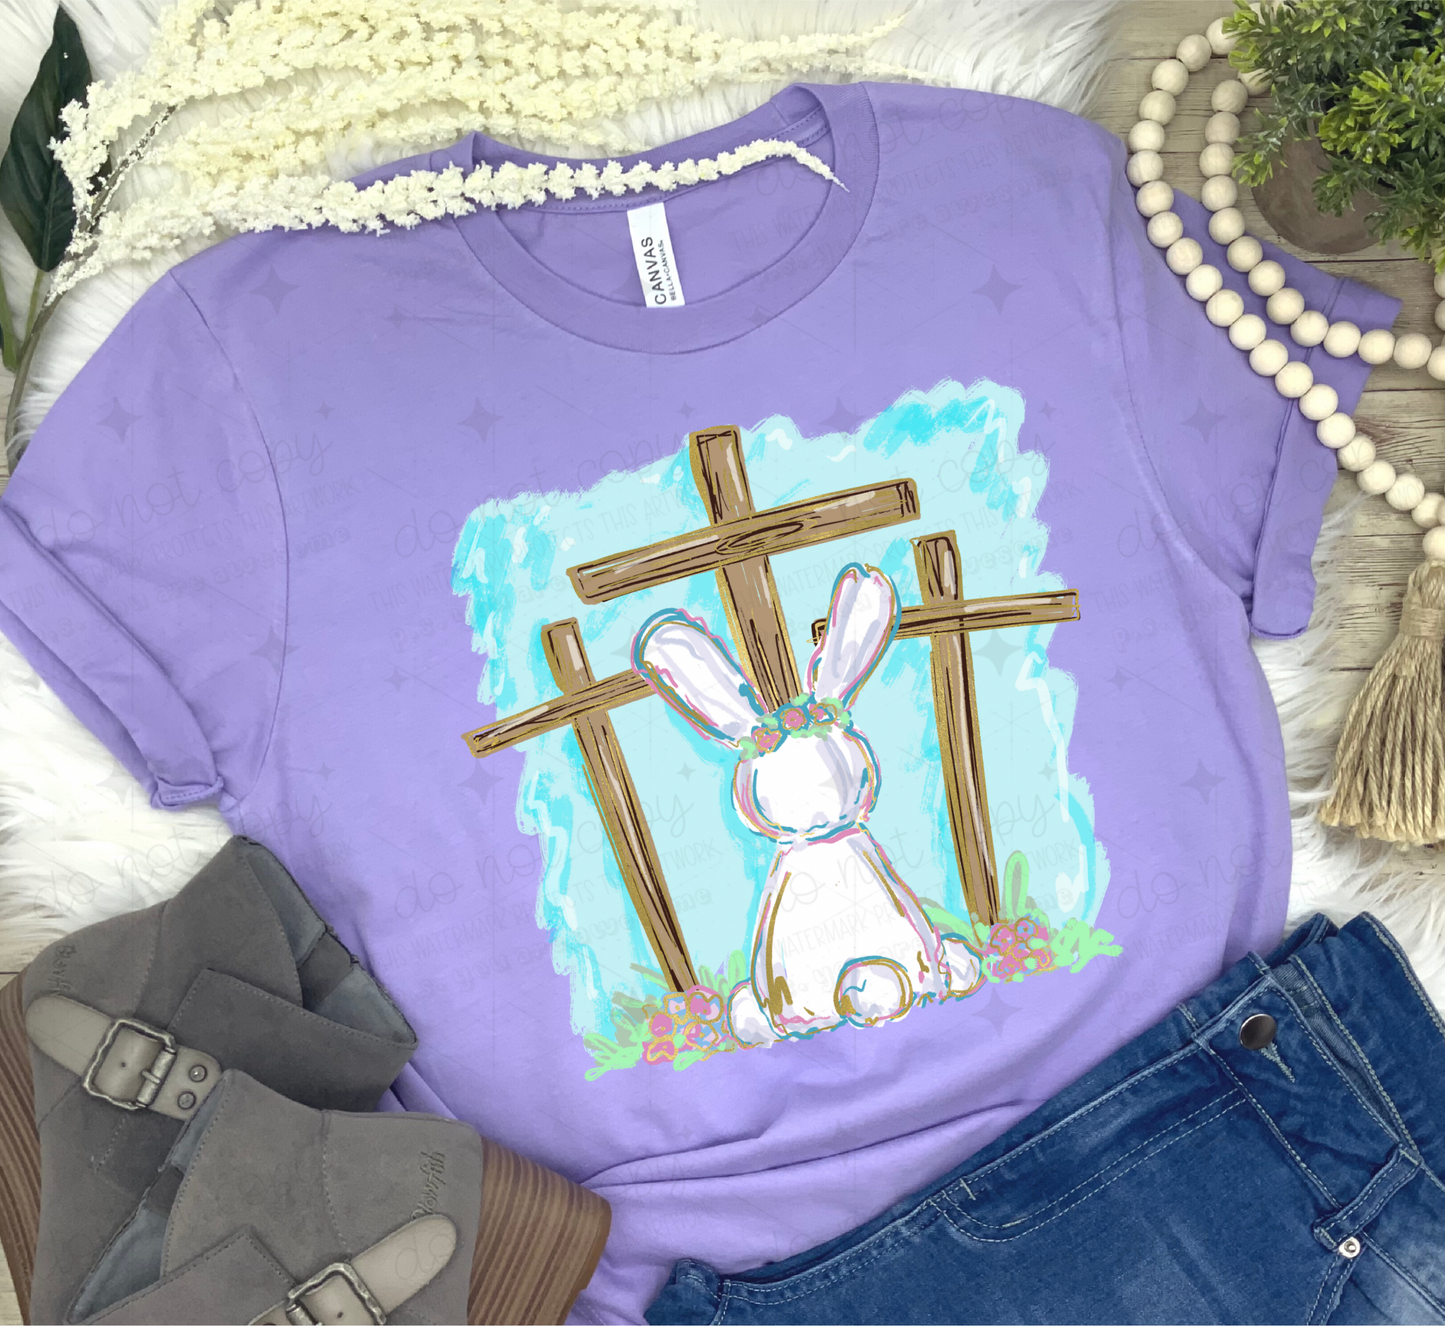 Three crosses with bunny